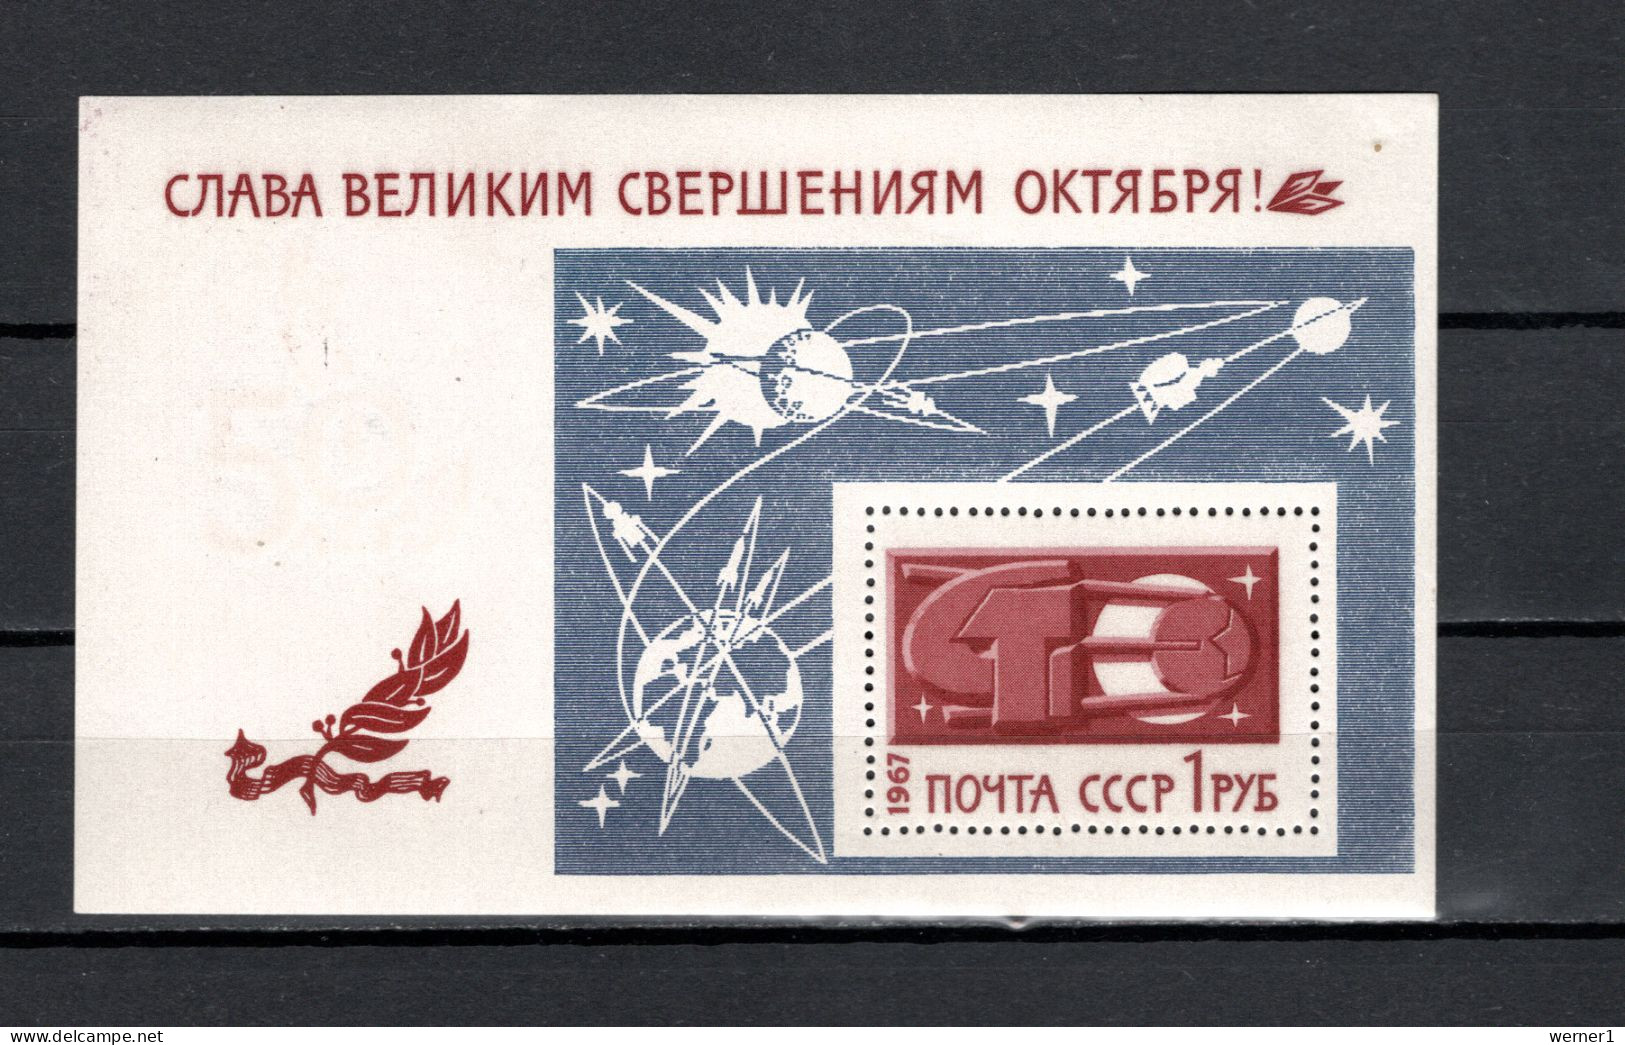 USSR Russia 1967 Space, October Revolution 50th Anniversary S/s MNH - UdSSR